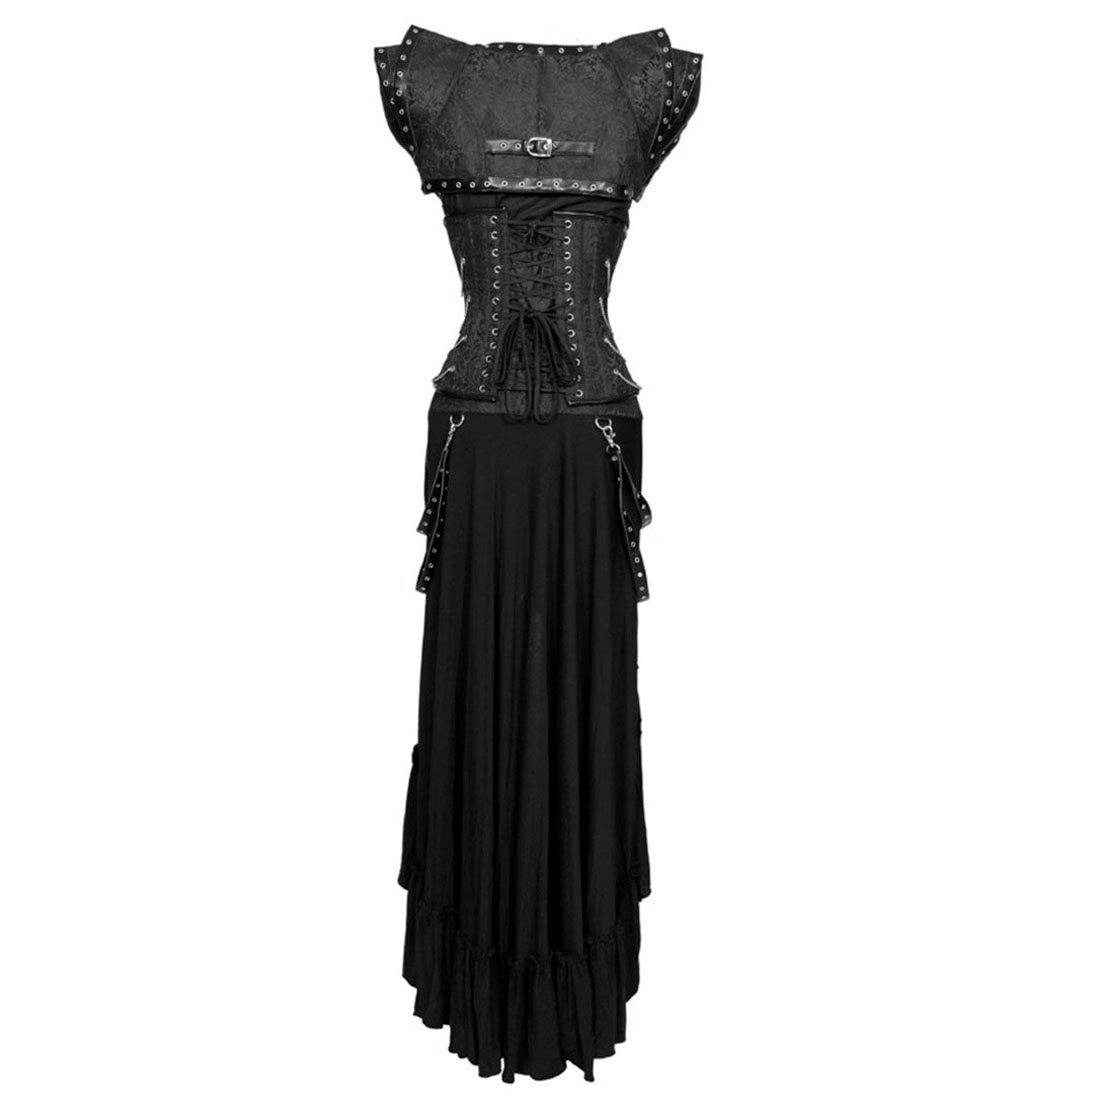 Dark Gothic Authentic Steel Boned Underbust Corset Dress - Corset Revolution